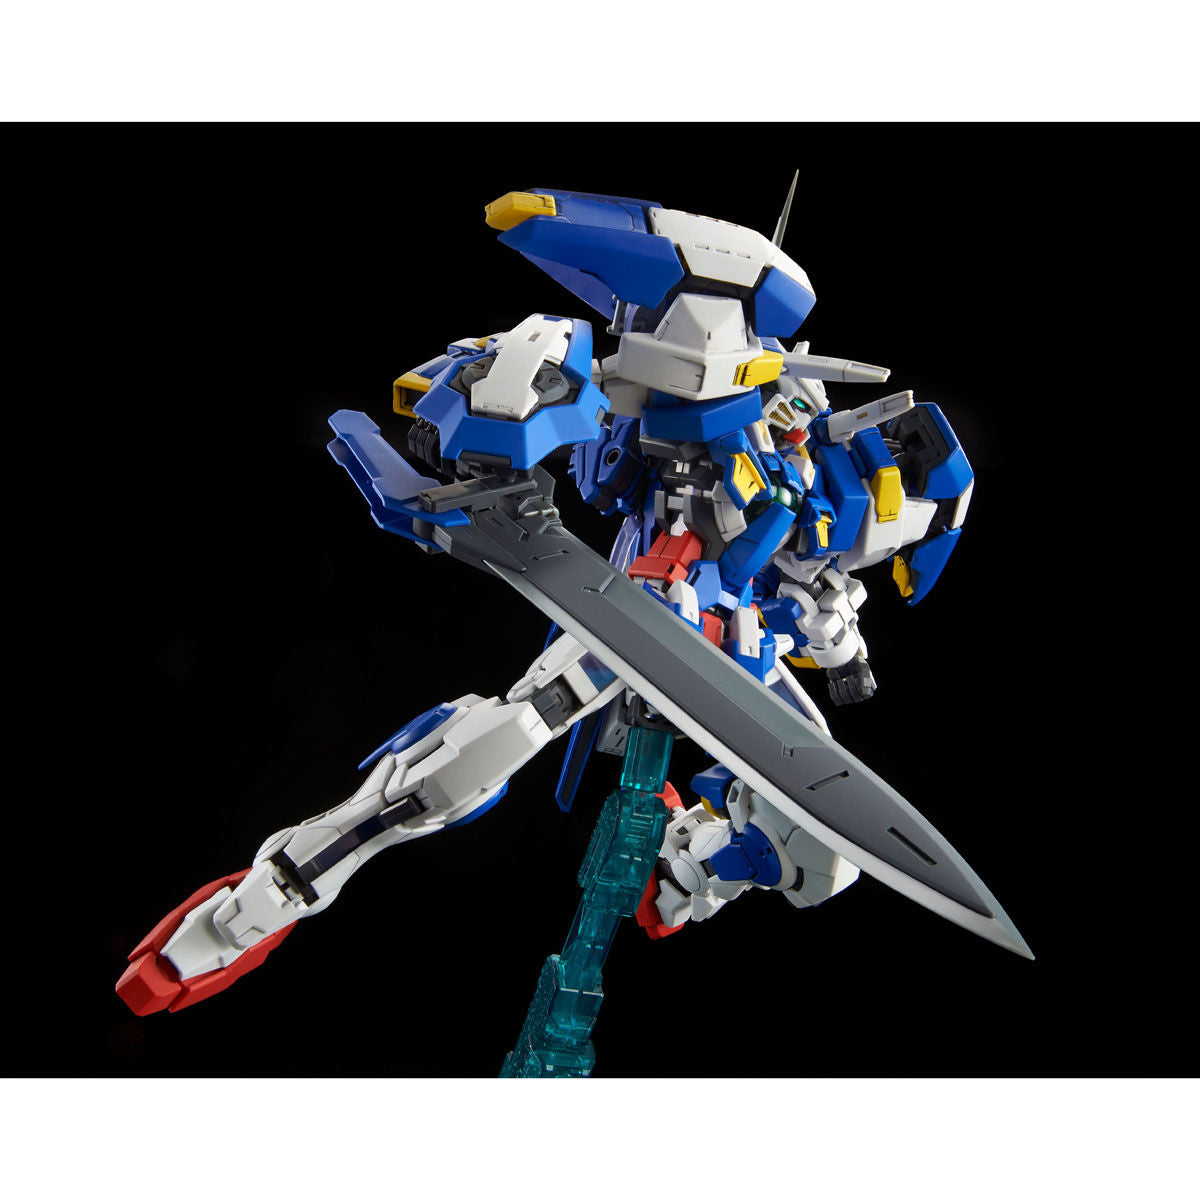 MG 1/100 Gundam Avalanche Exia - Glacier Hobbies - Bandai